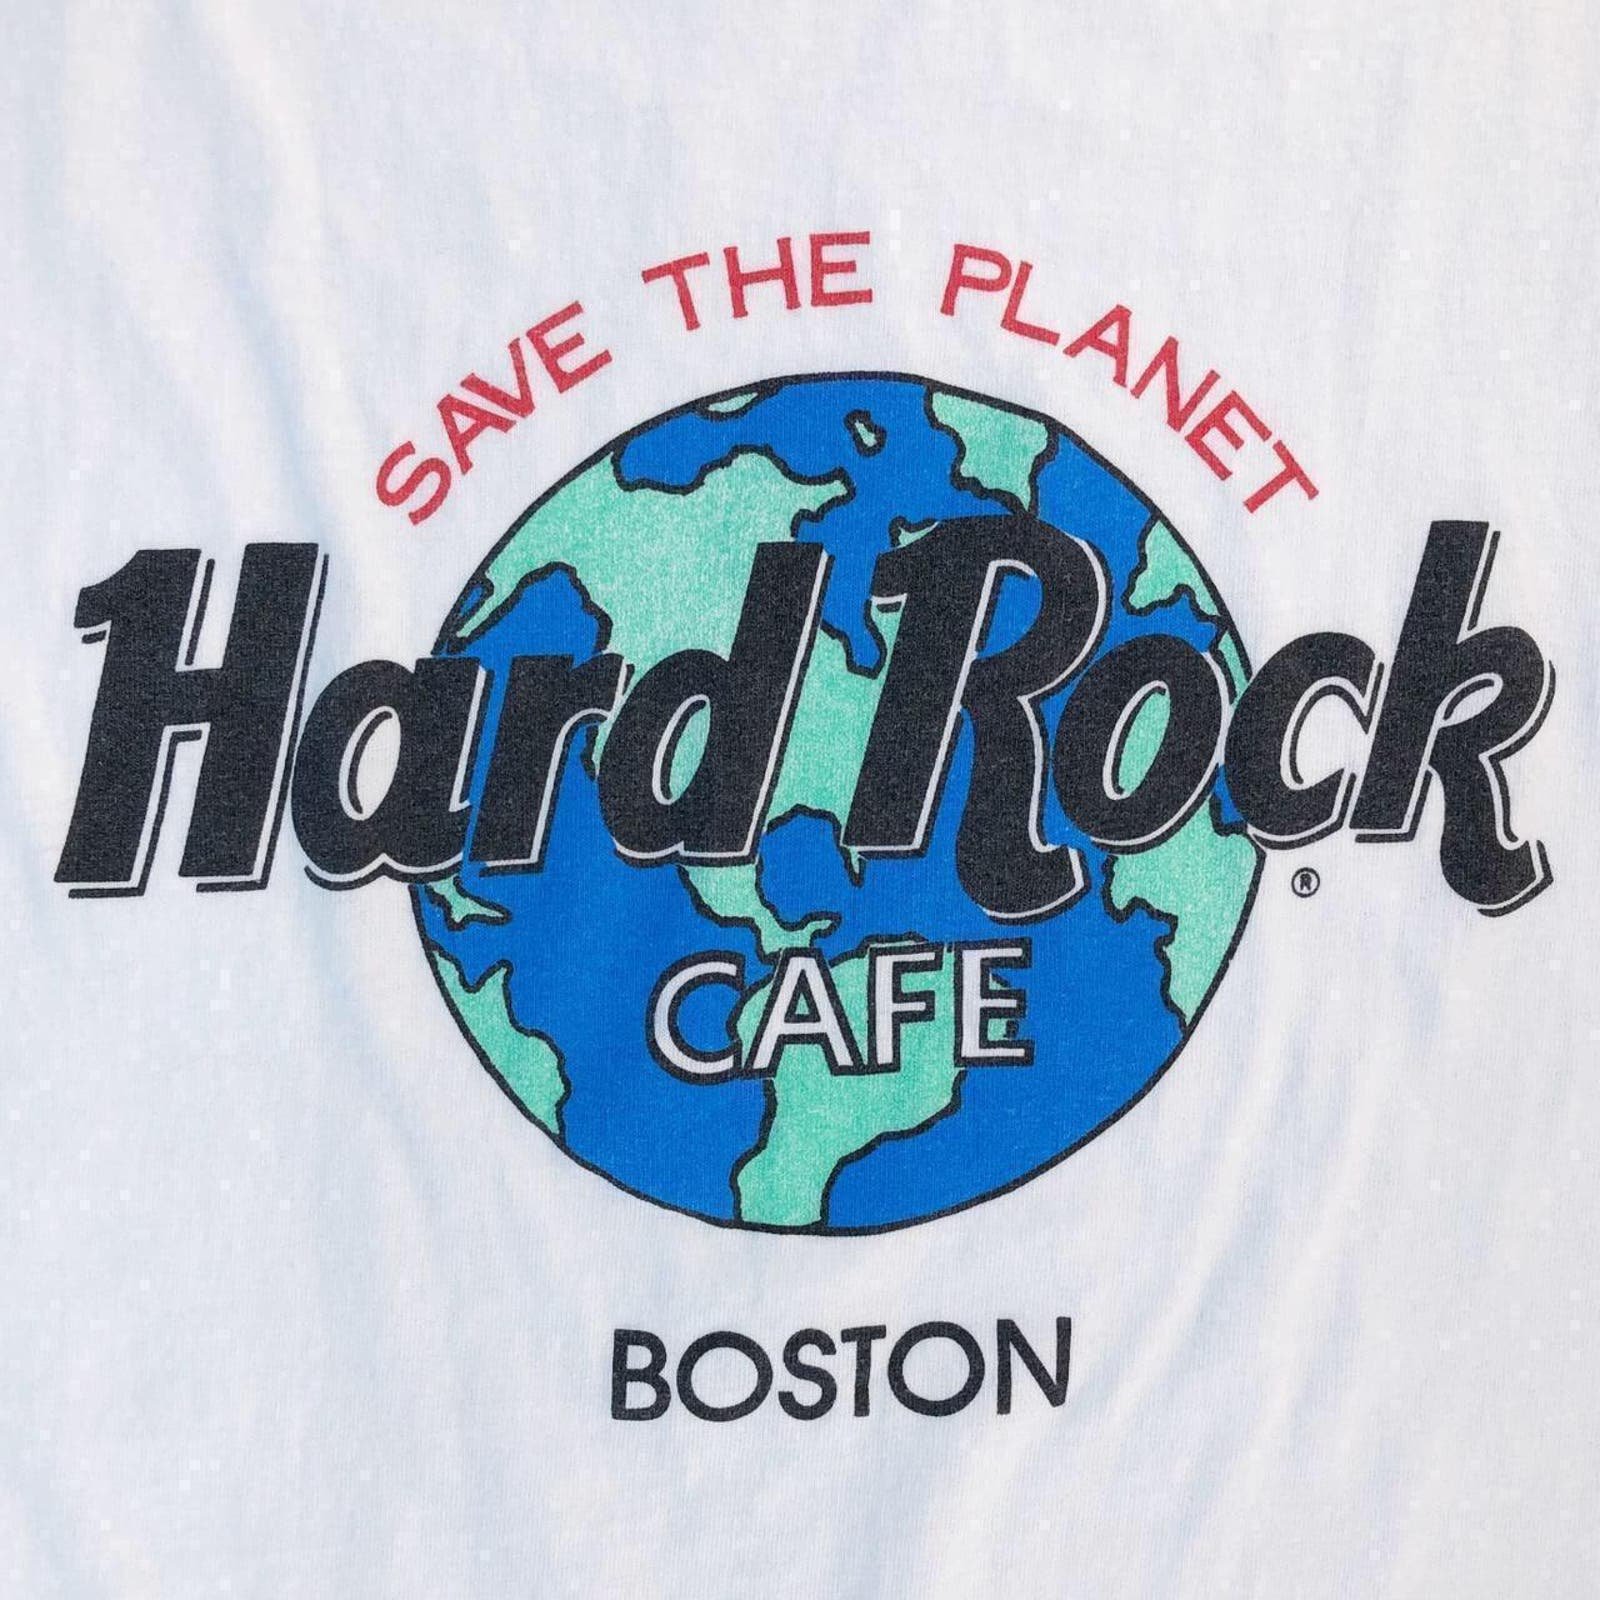 Hard Rock Cafe Boston Save the Planet tank top 90s 1990s vintage bBwmaWEMJ